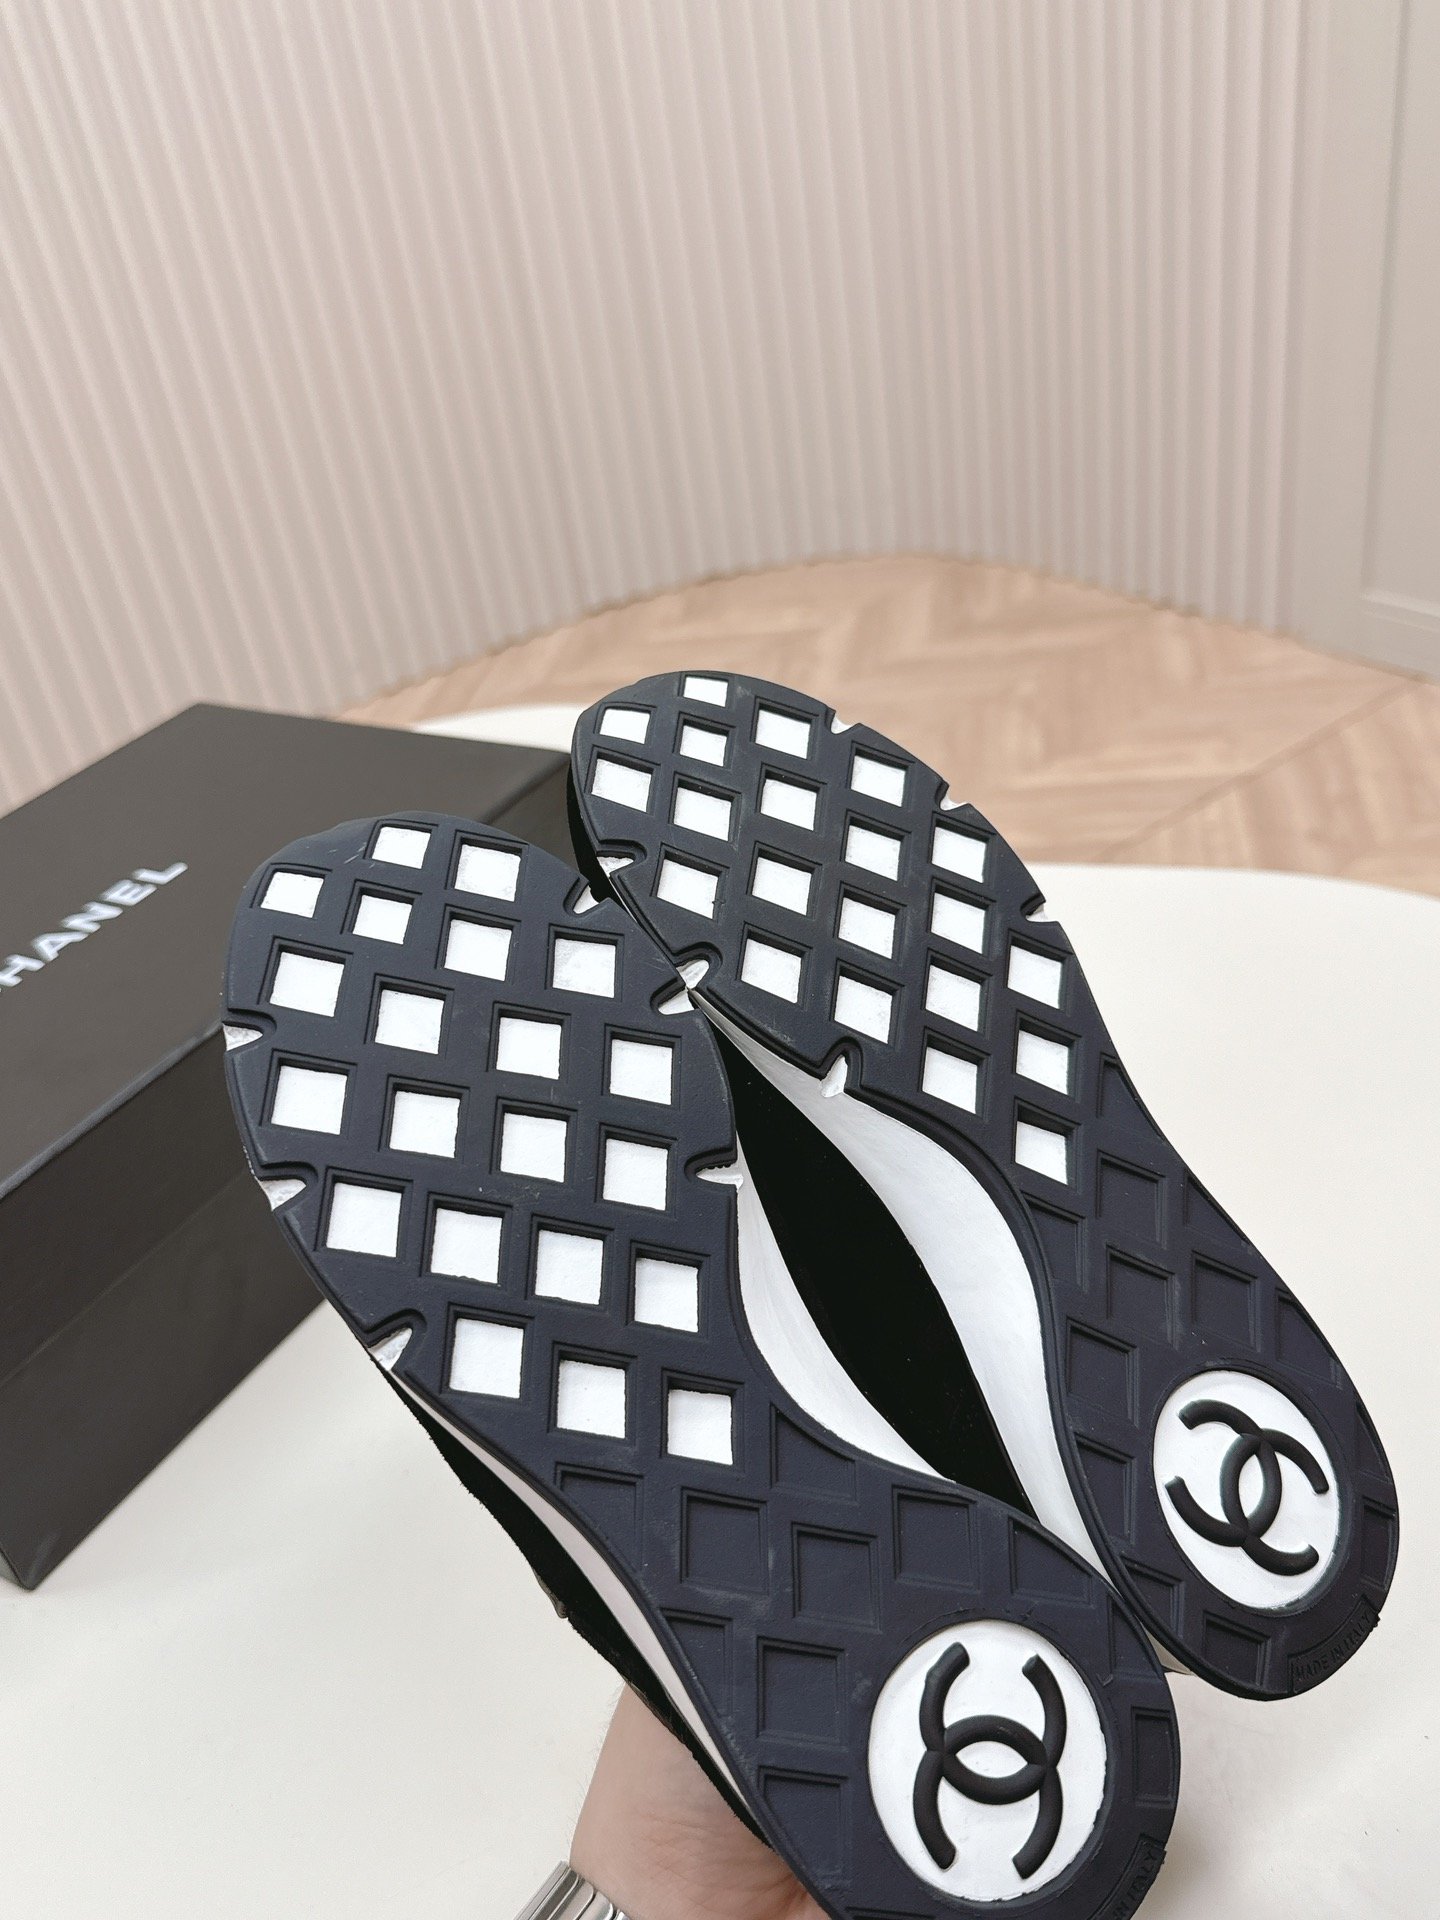 Chanel香奈儿24P最新爆款运动鞋休闲板鞋小香爆款单品经典配色每个颜色都超美超百搭上服非常舒适面料: